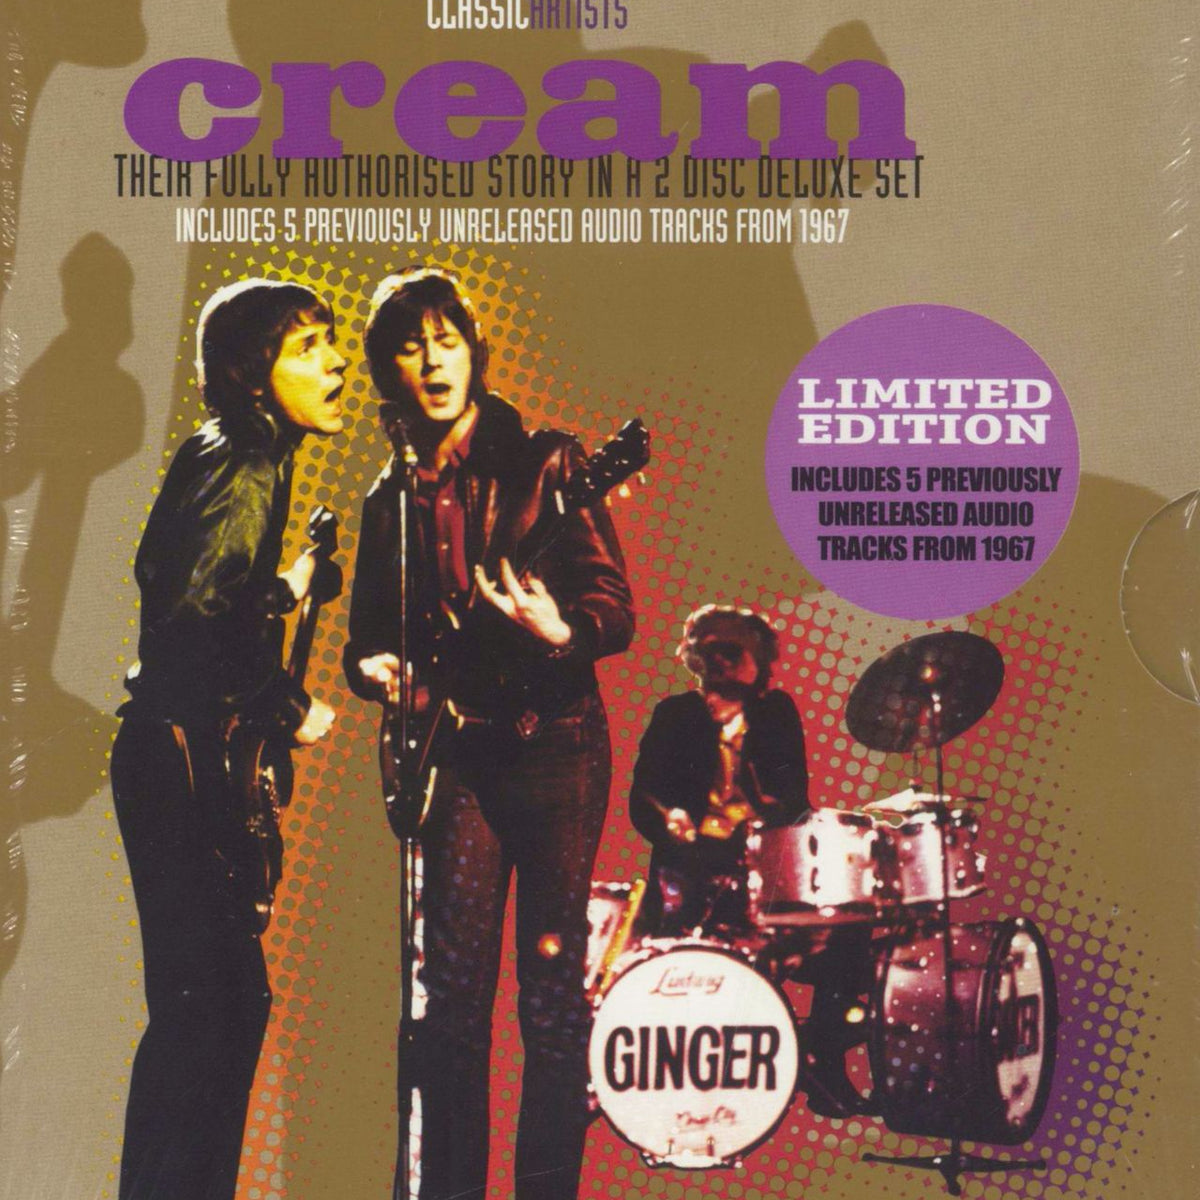 Cream Cream - The Fully Authorised Story UK 2-disc CD/DVD set —  RareVinyl.com